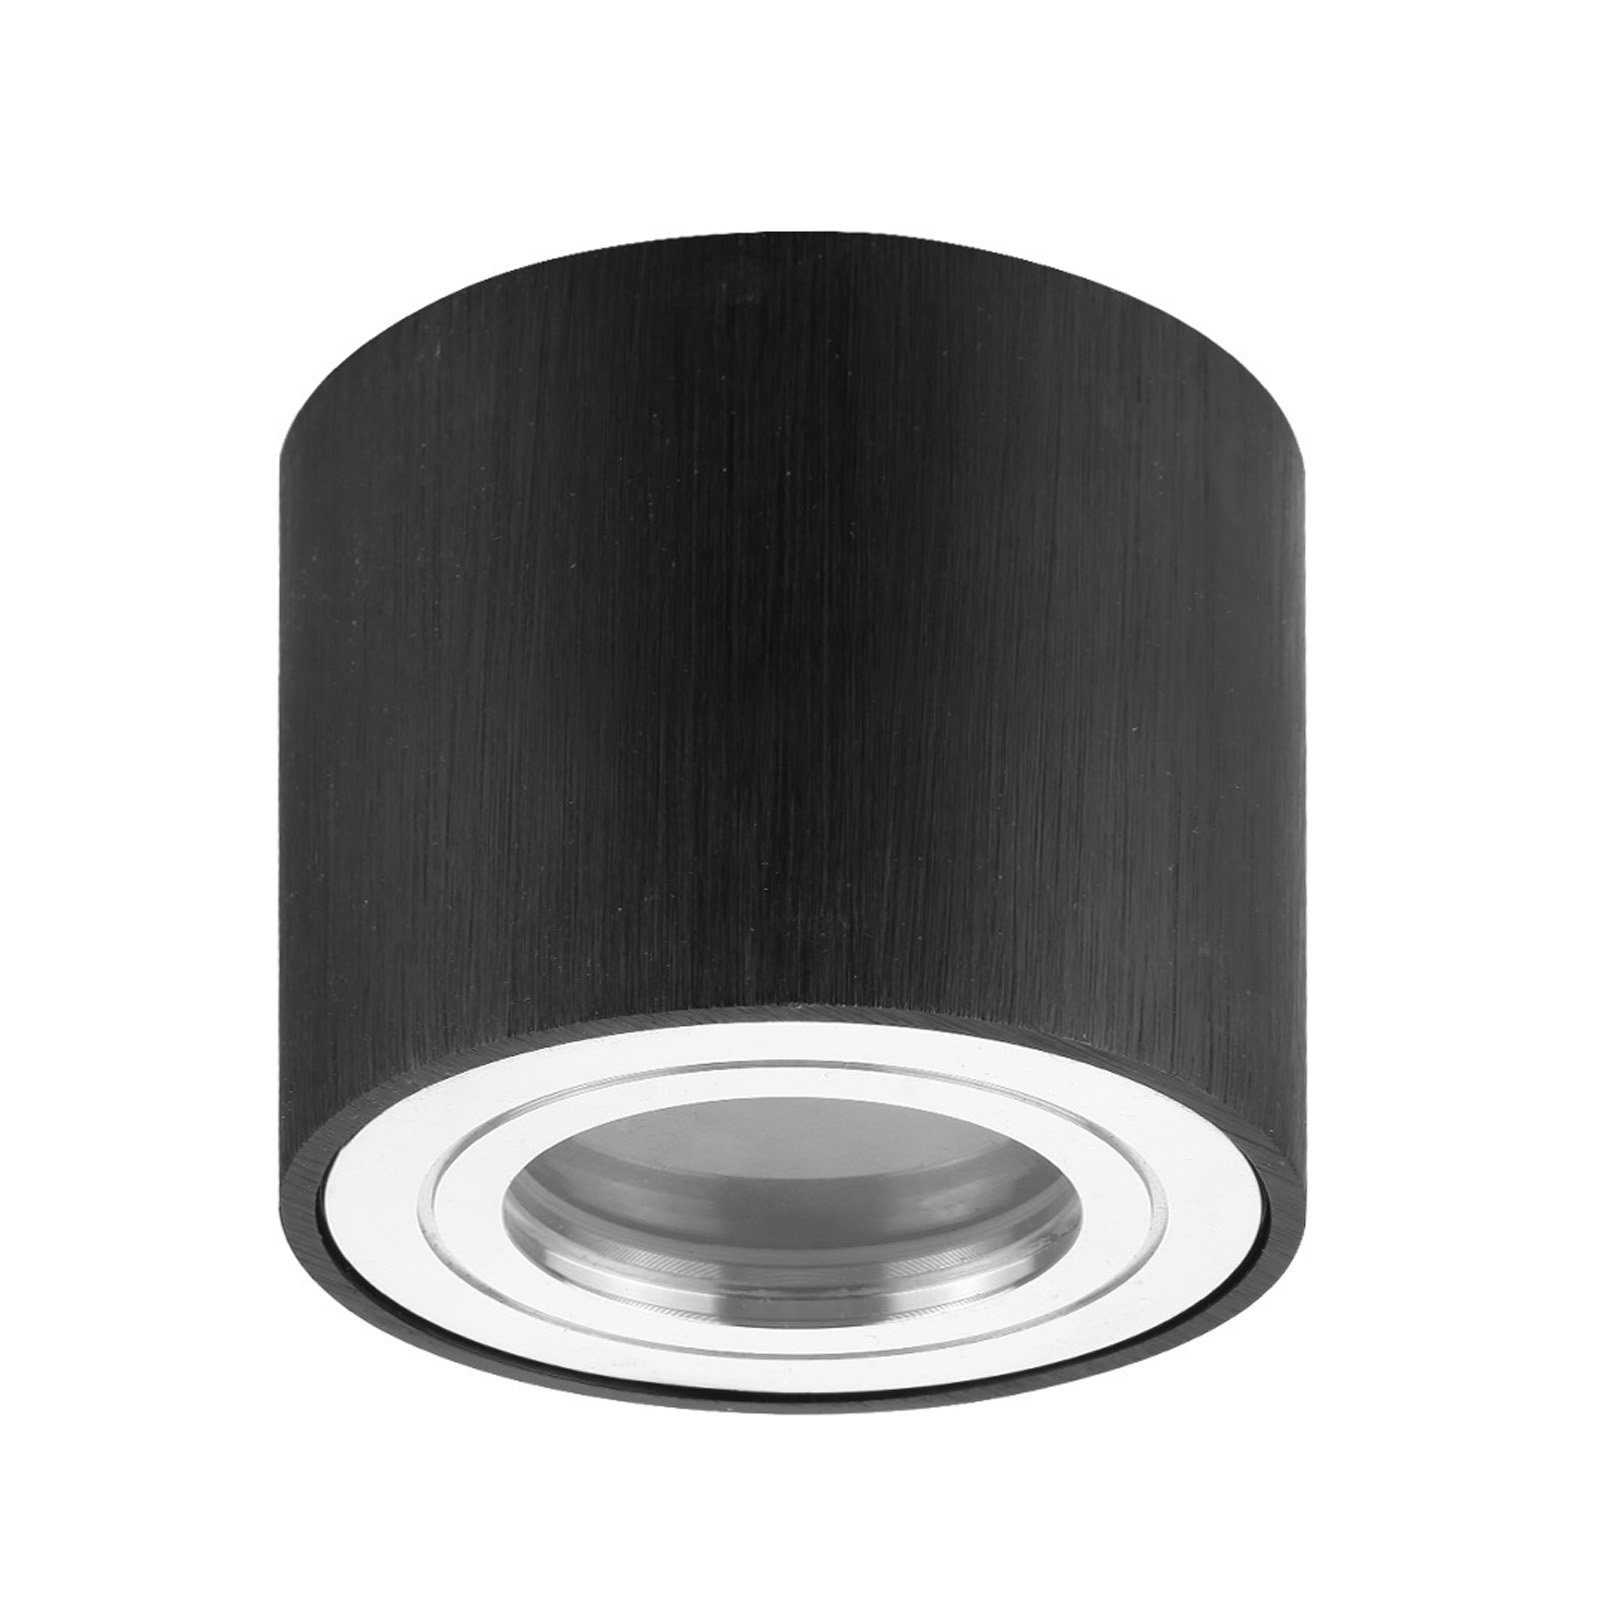 Sweet LED Aufbauleuchte Bad IP44 Aluminium schwarz chrom Deckenspot Badezimmer, ohne Leuchtmittel, Aufbaustrahler LED, Aufbauspot